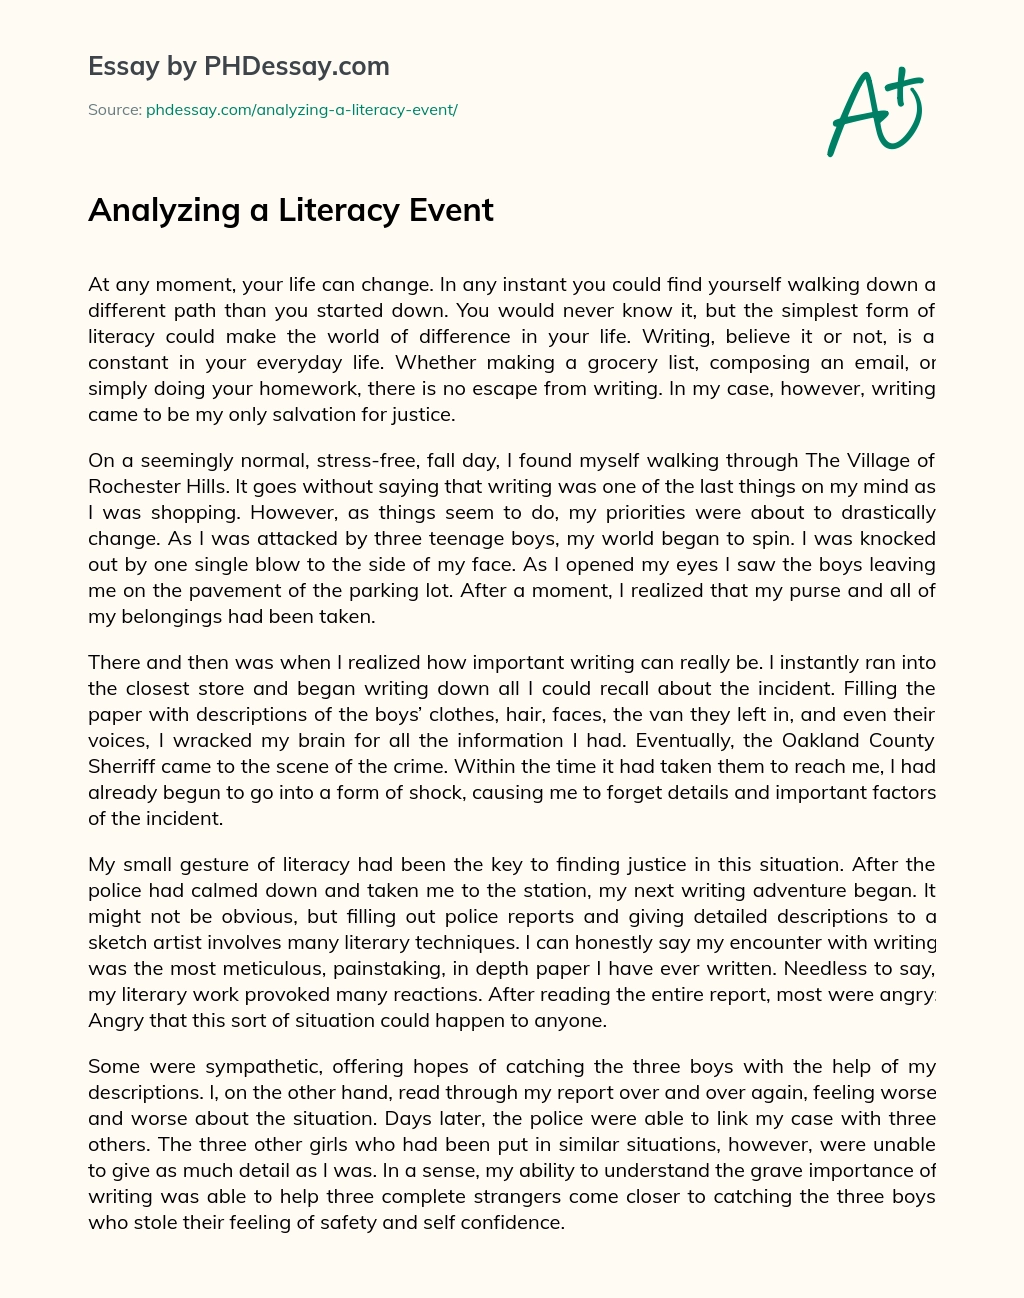 Analyzing a Literacy Event essay